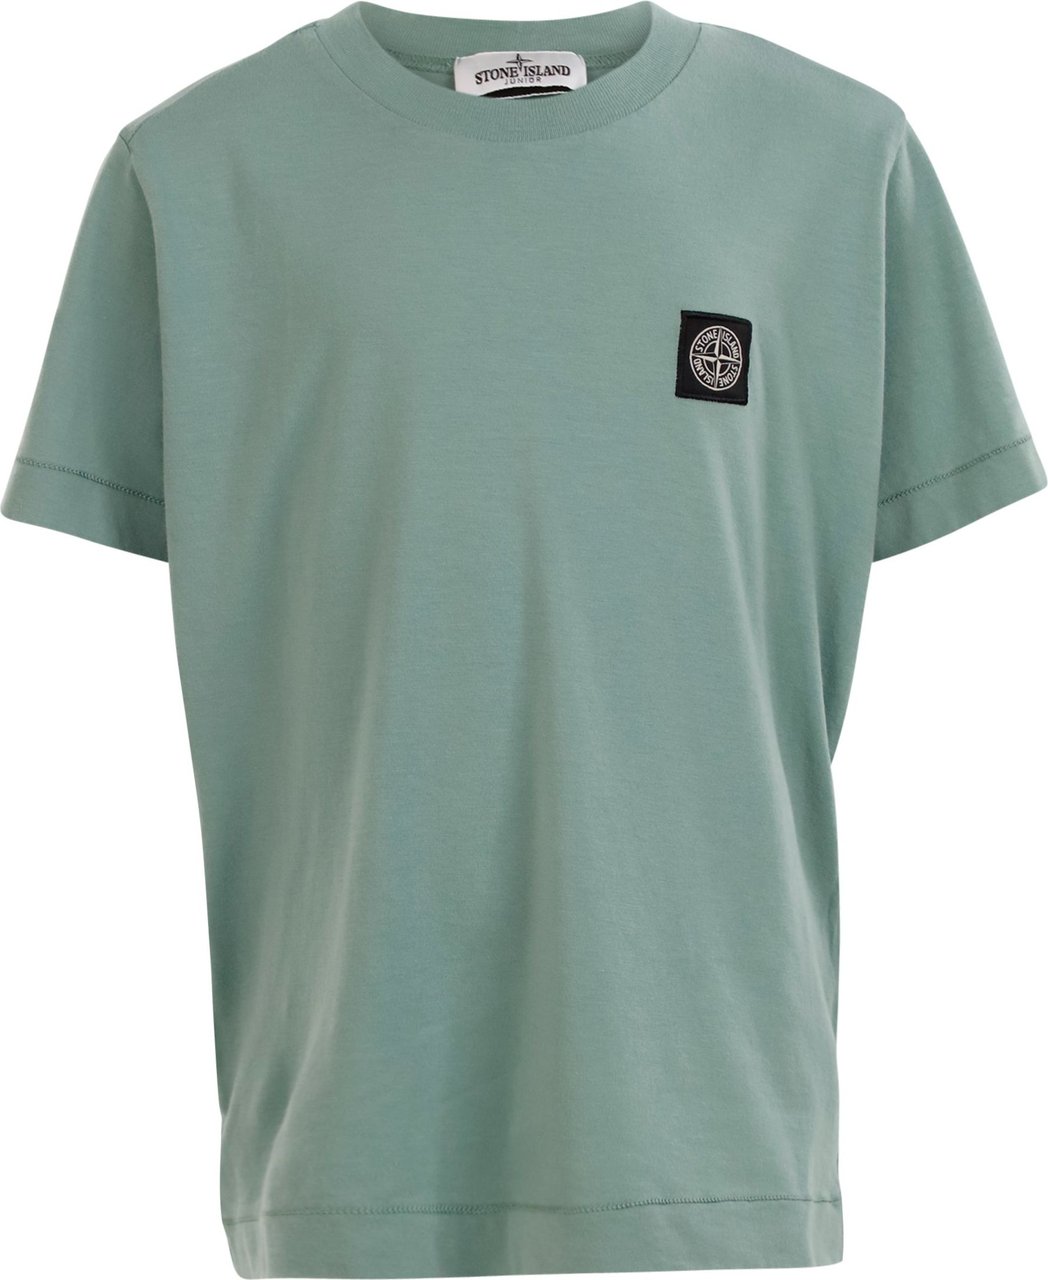 Stone Island Junior Shirts & Tops 7716 20147 Groen